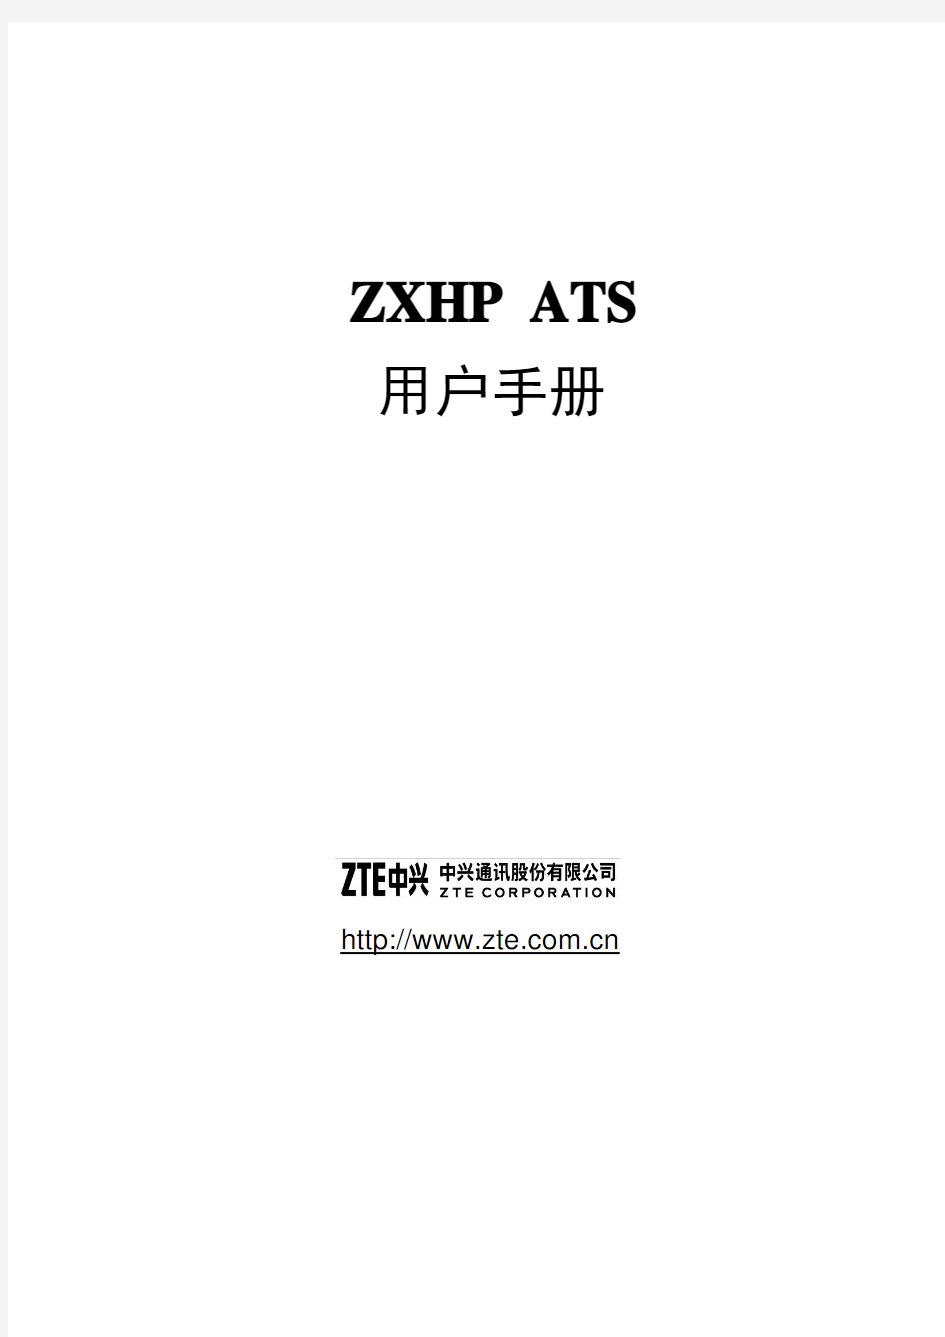 ZXHP ATS中文用户手册201206